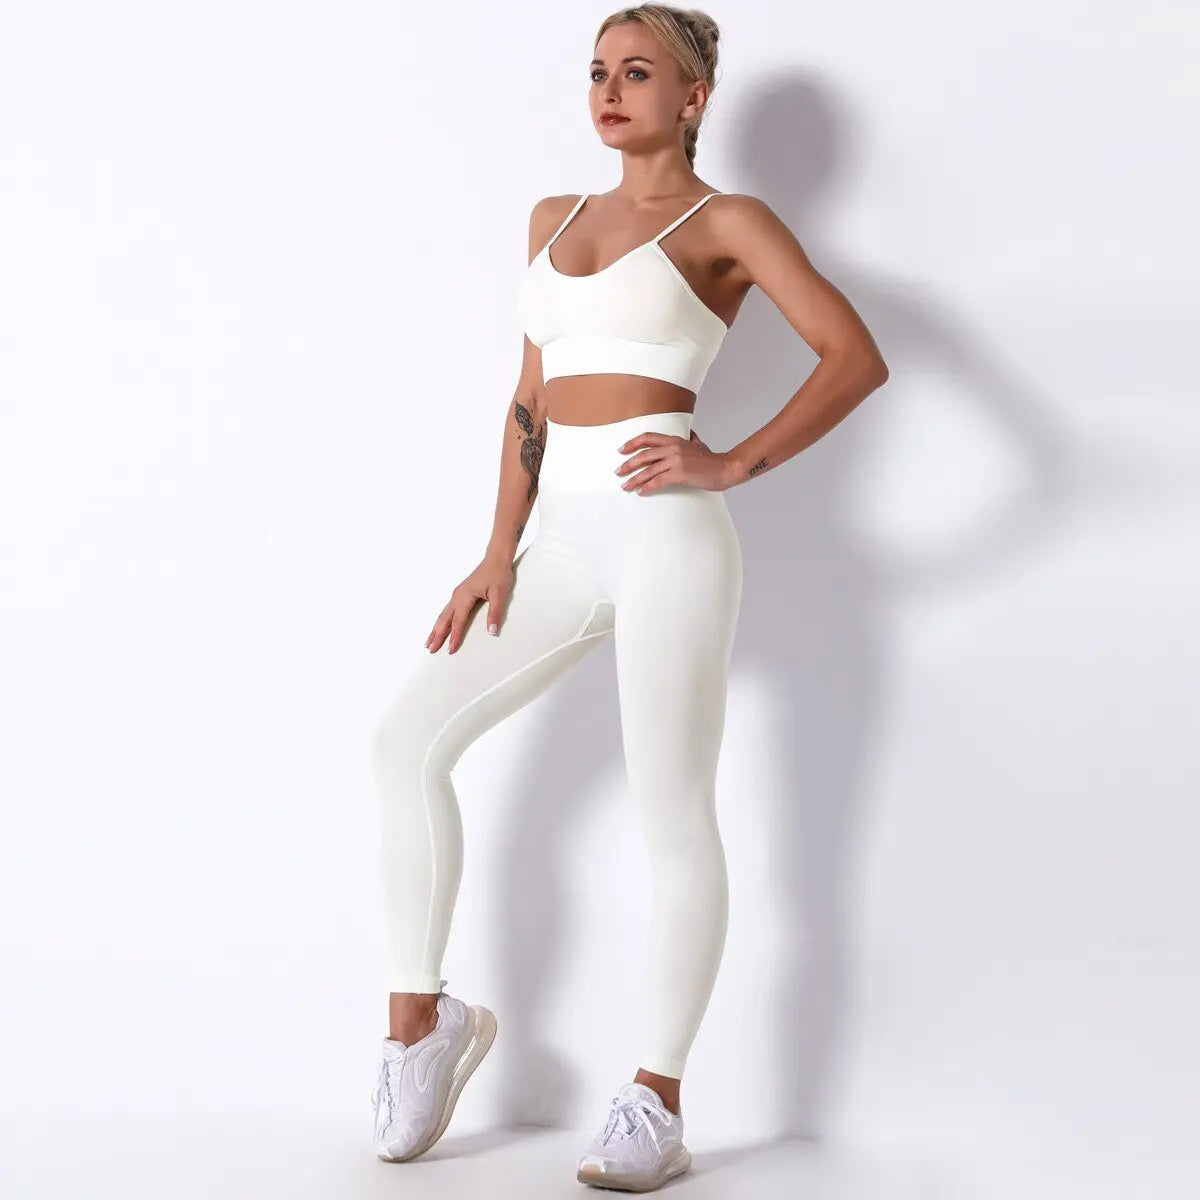 Women Seamless Workout Outfits Sets White-Bra Pant Set